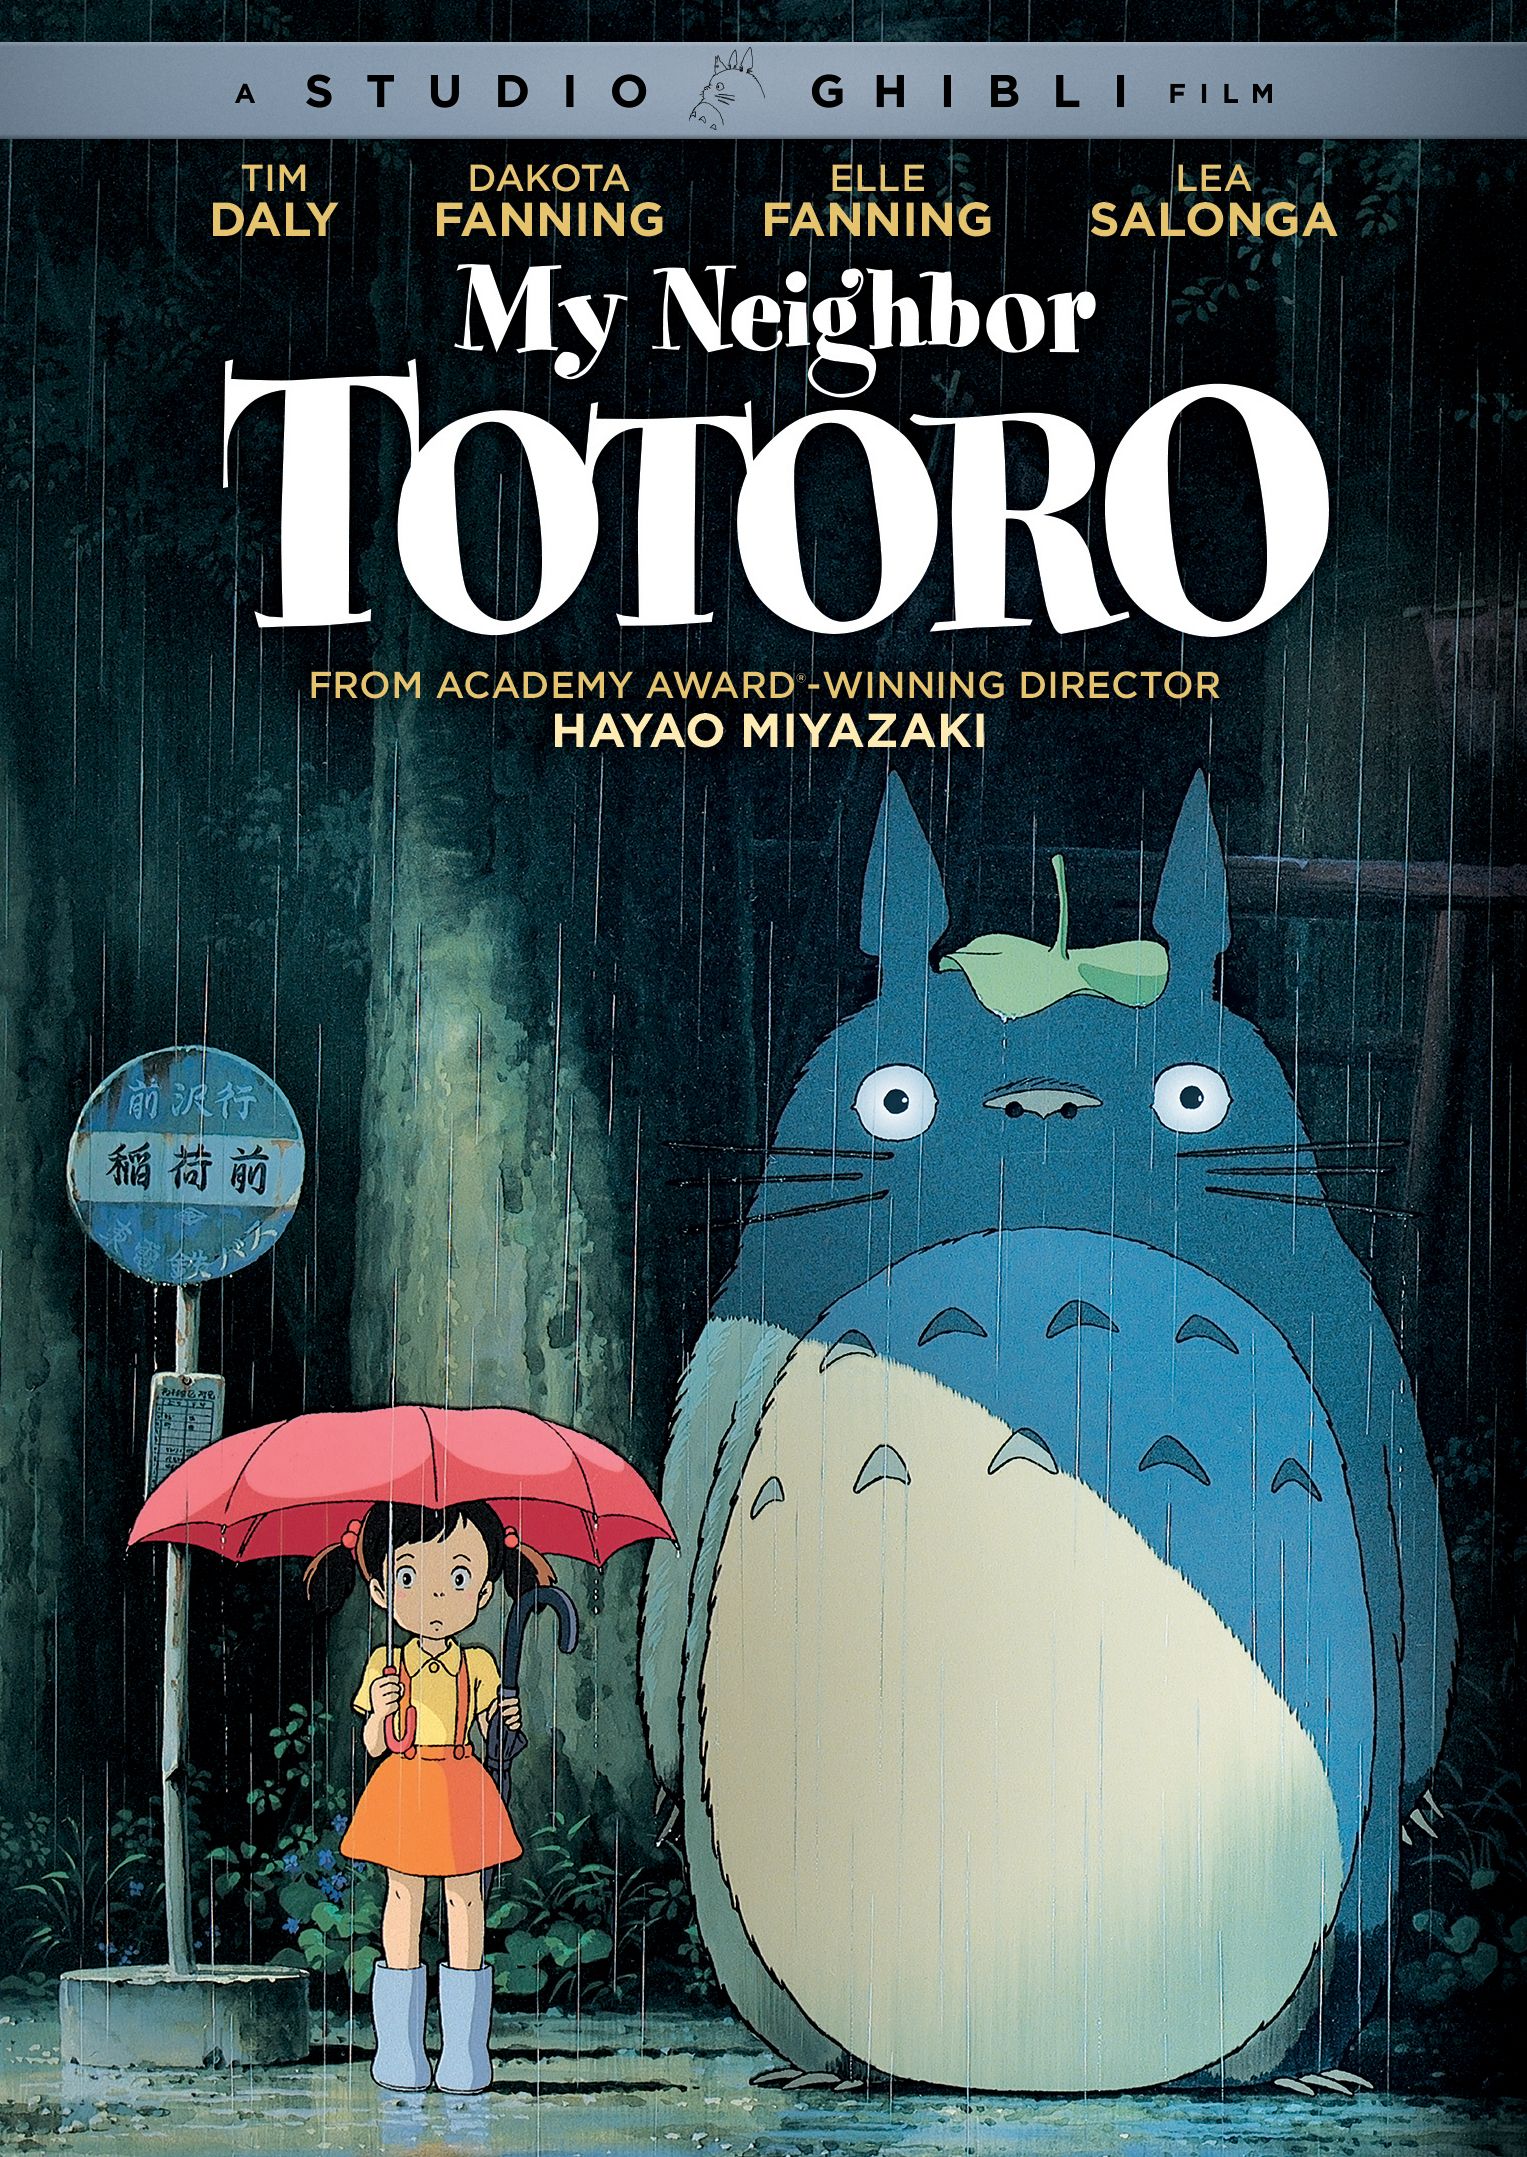 Satsuki and Totoro at the bust stop in the rain in Studio Ghibli's My Neighbor Totoro